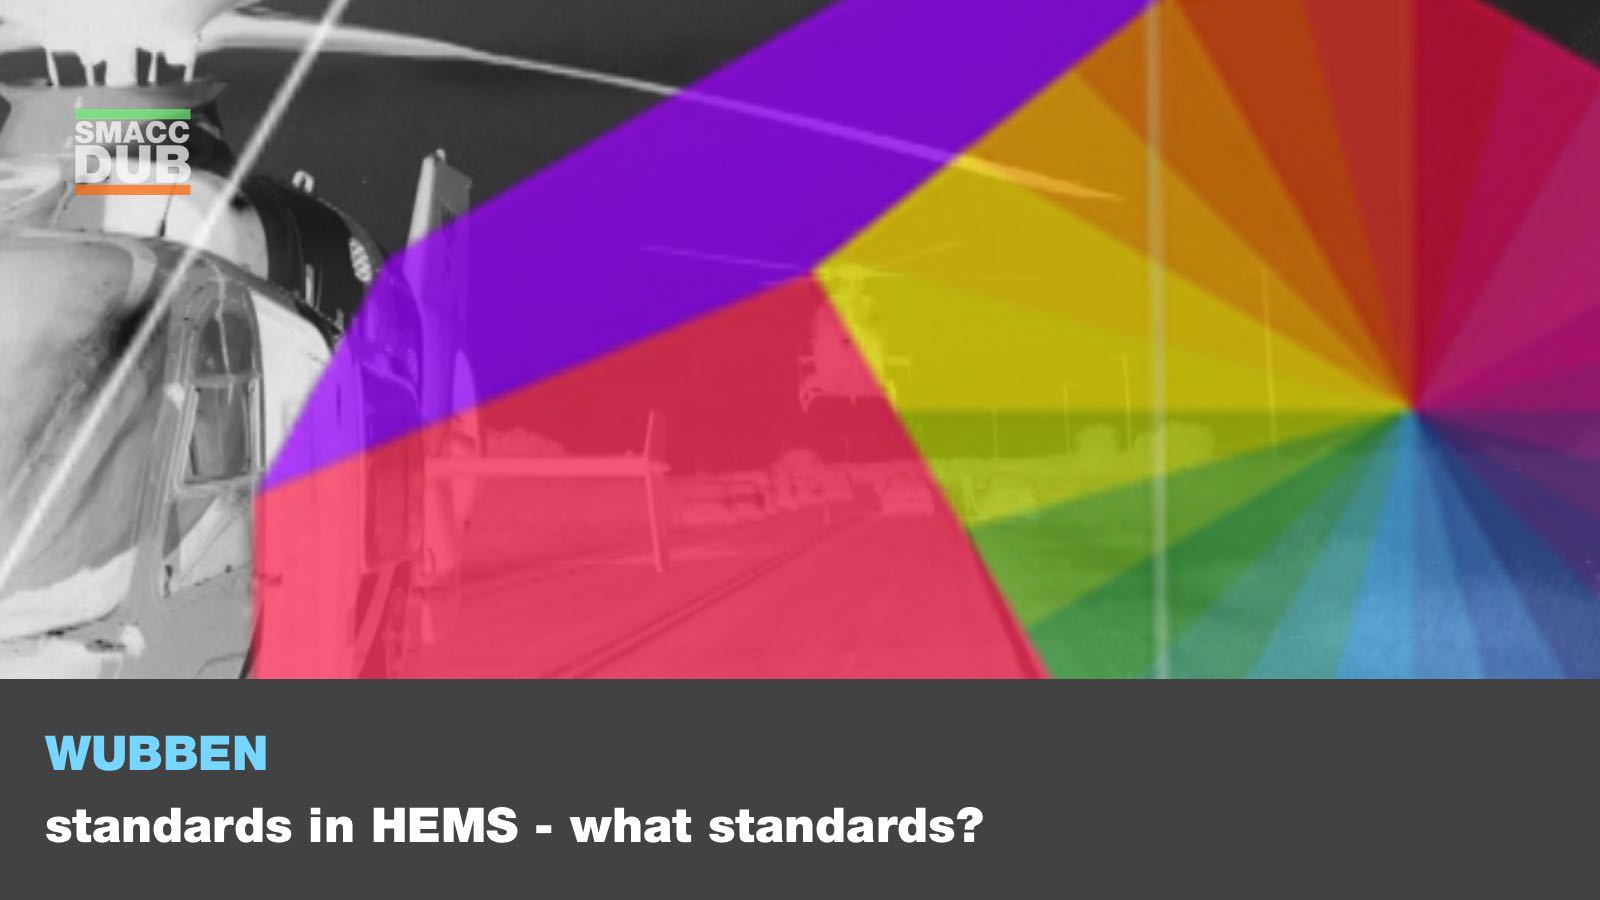 smaccforce - Wubben - Standards in HEMS - what standards